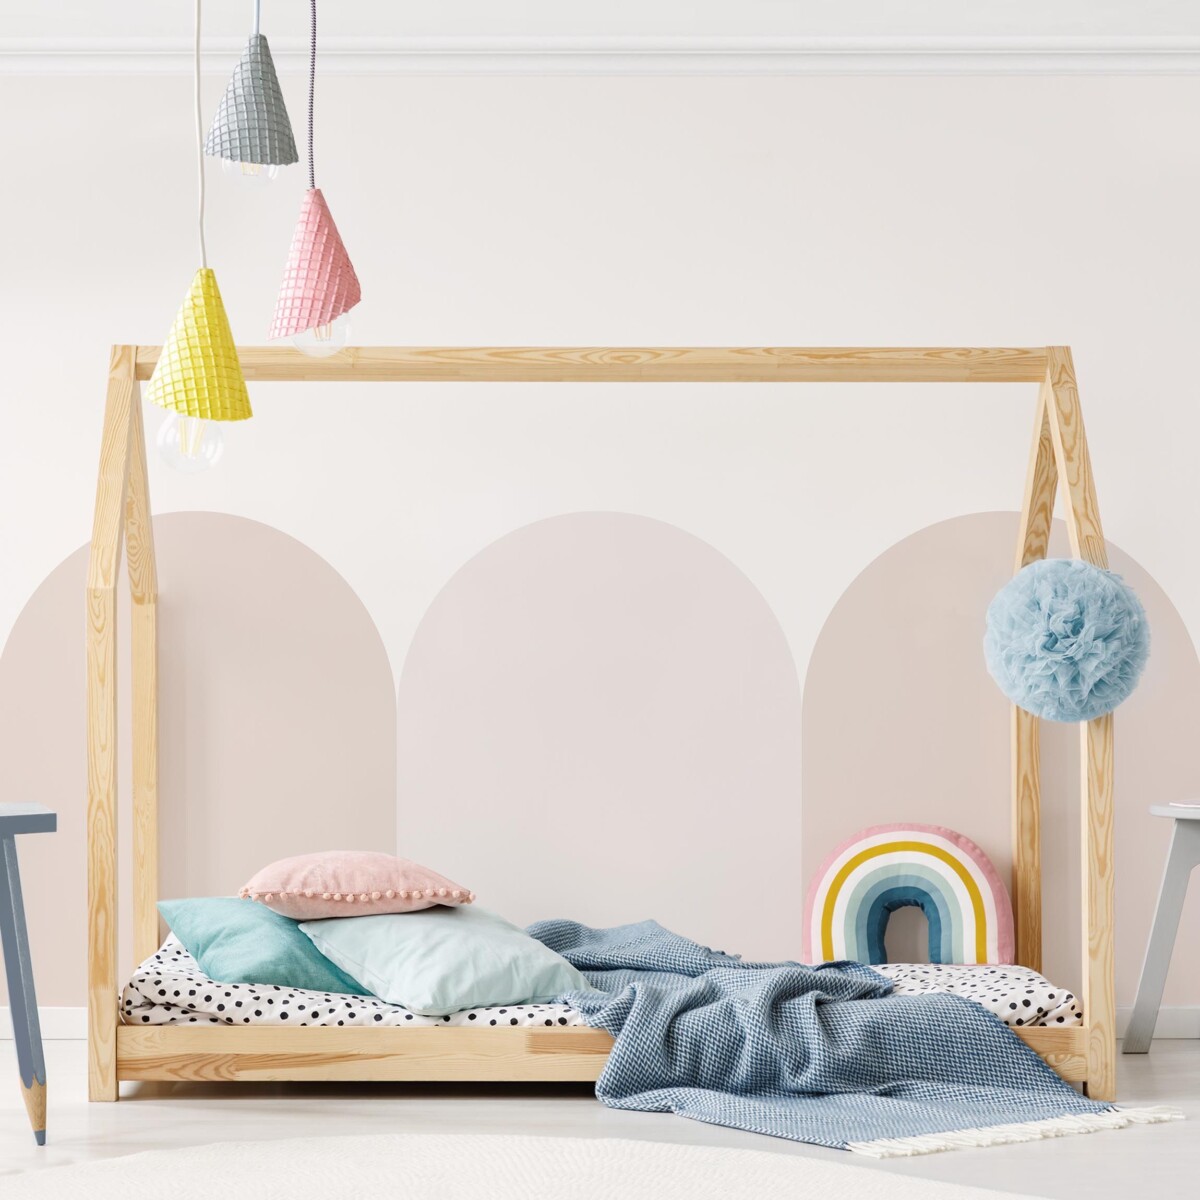 Moderne Wandgestaltung Kinderzimmer – Halbkreisbordüre groß beige Mix